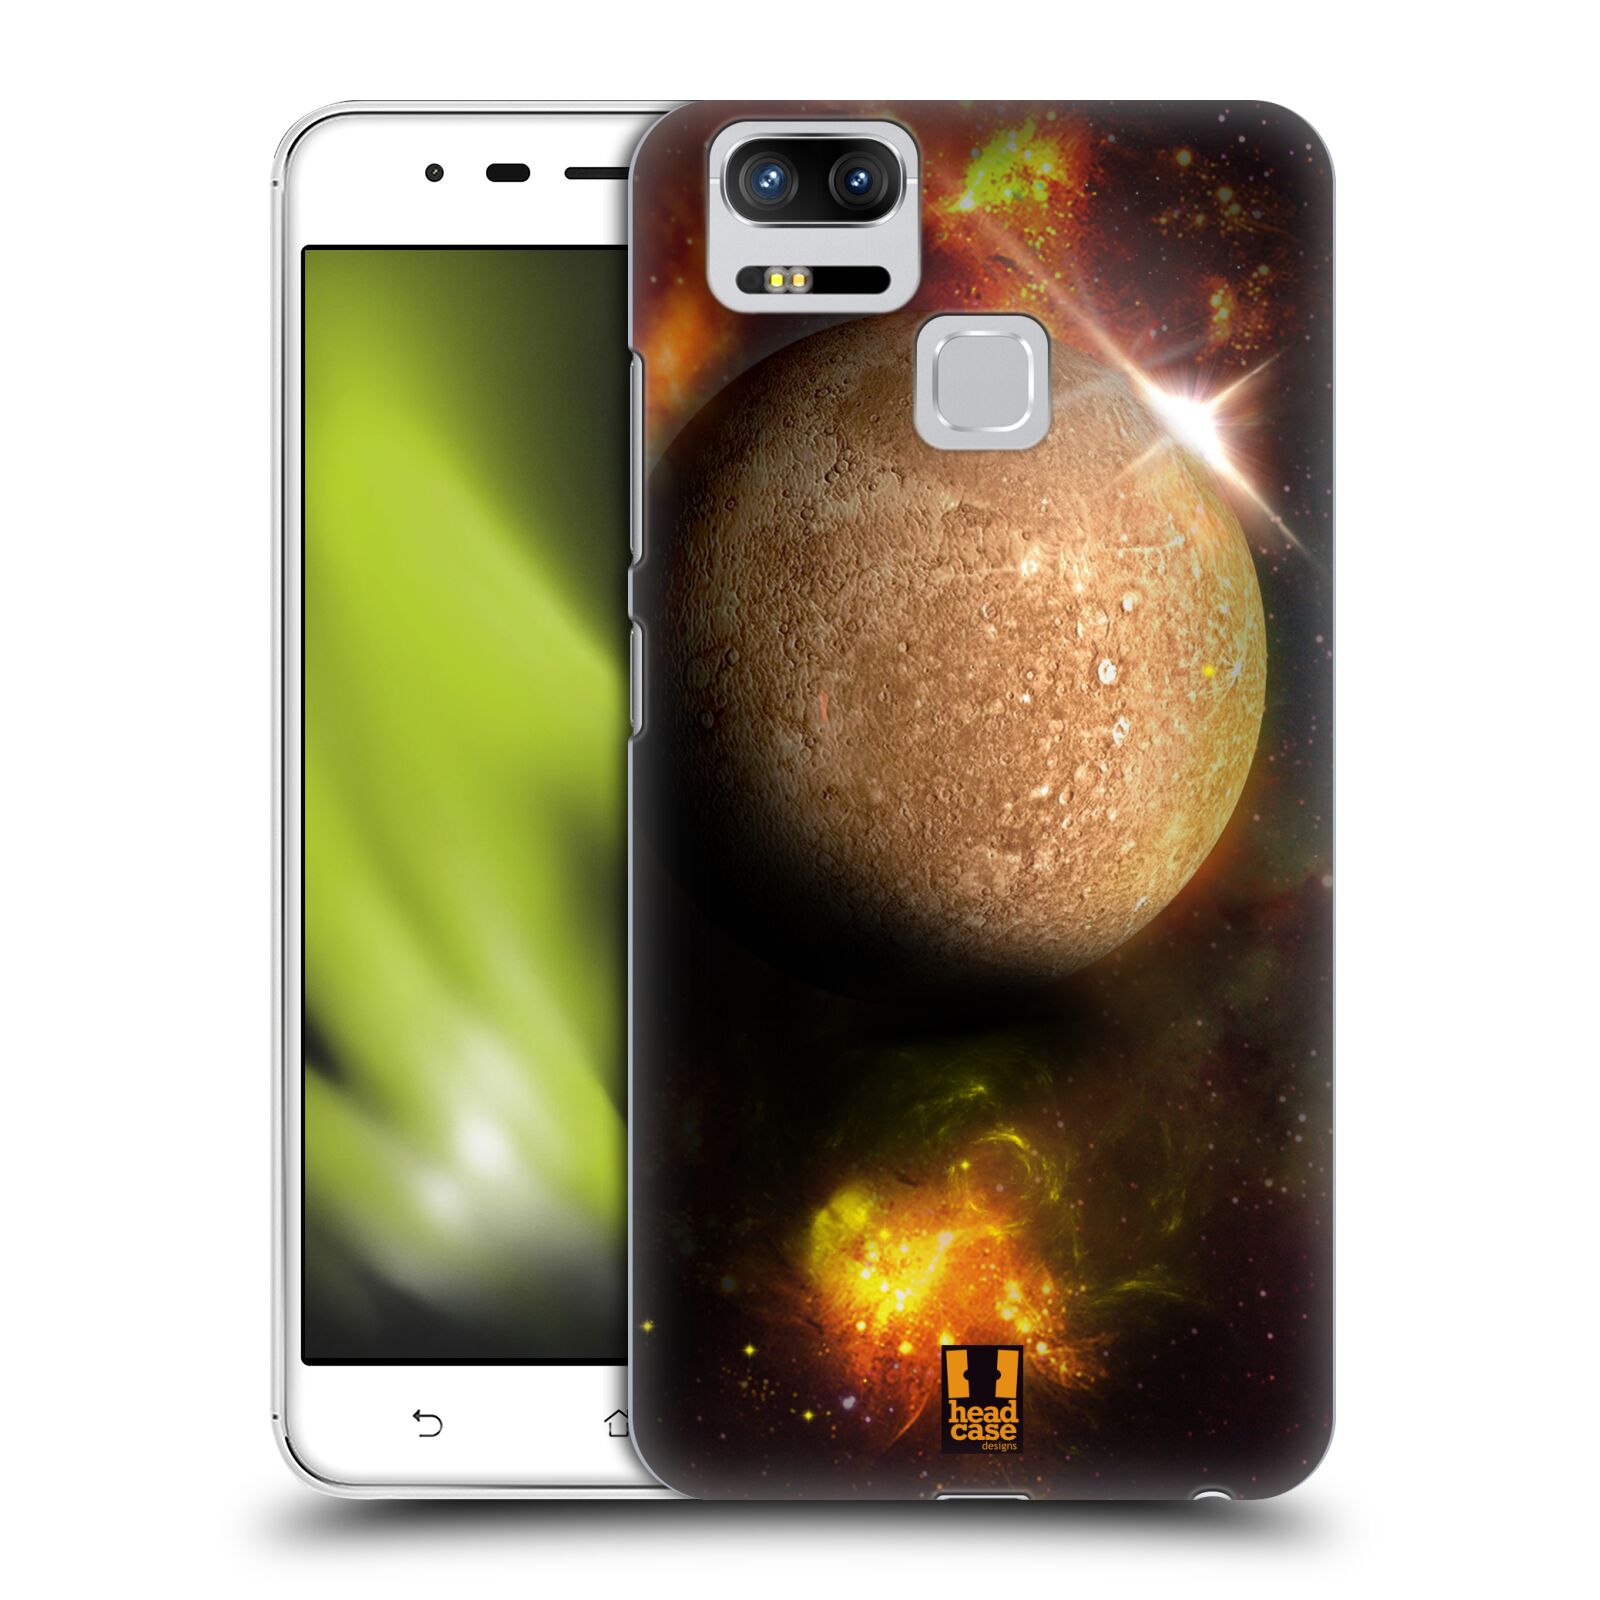 HEAD CASE plastový obal na mobil Asus Zenfone 3 Zoom ZE553KL vzor Vesmírná krása MERKUR PLANETA